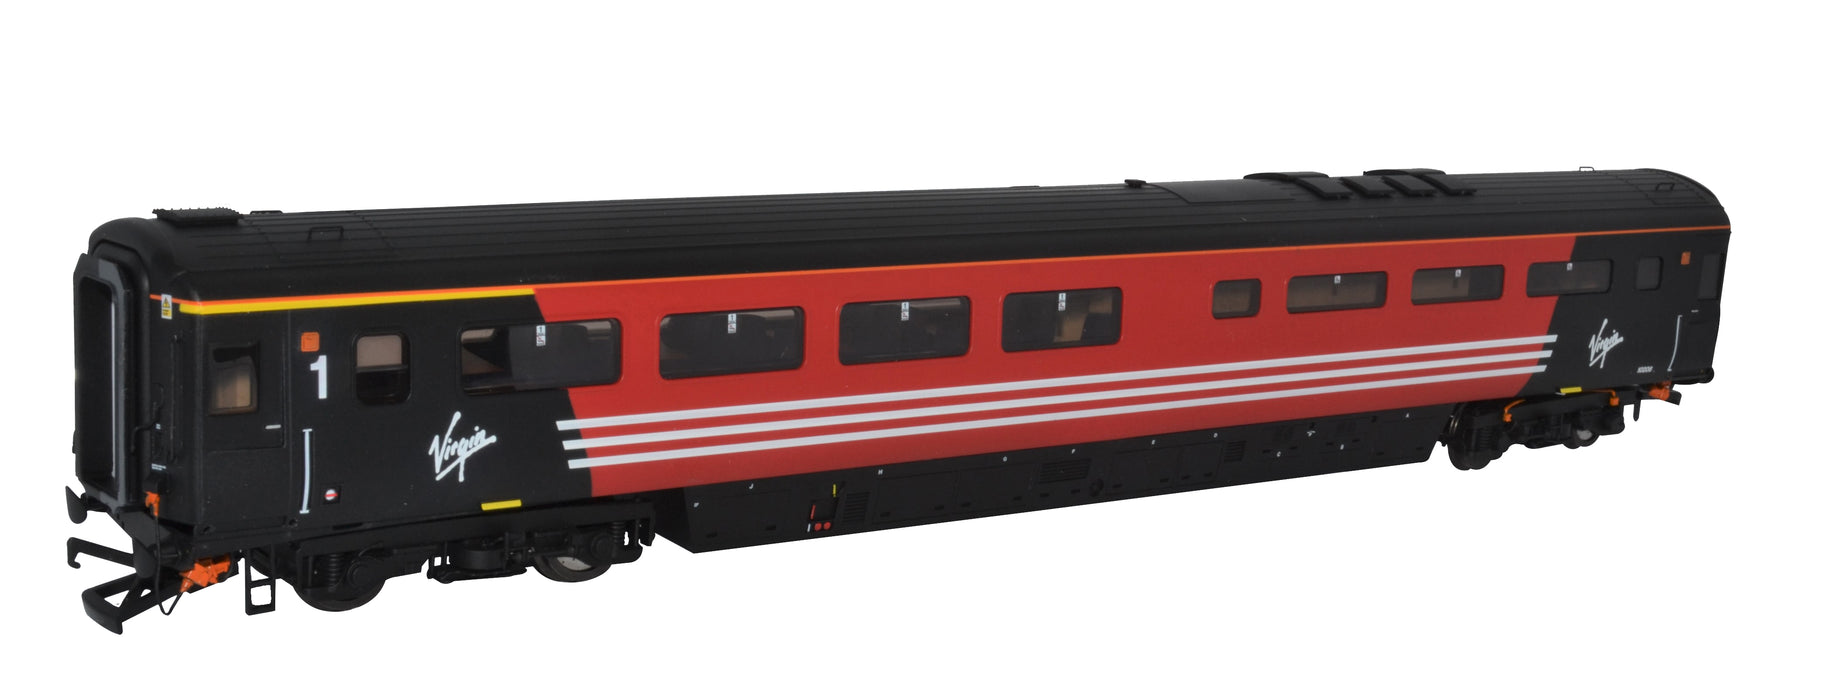 Oxford Rail MK3A-RFM Virgin West Coast 10206